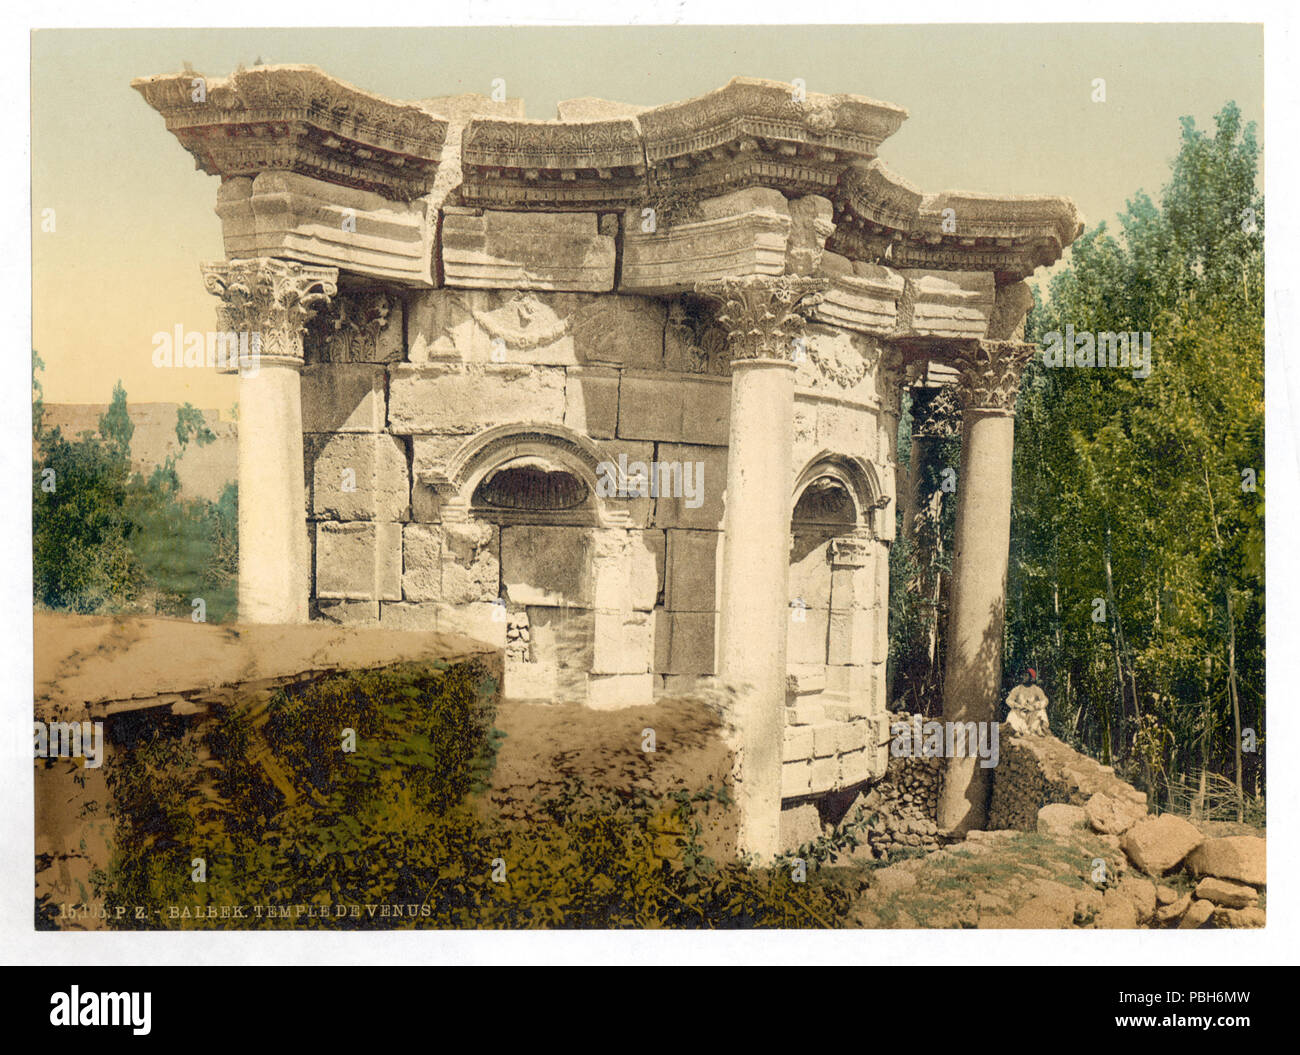 1695 Die runde Tempel (Tempel der Venus), Baalbek, Heiliges Land, (d. h., Ba'labakk, Libanon) - lccn 2002724962 Stockfoto